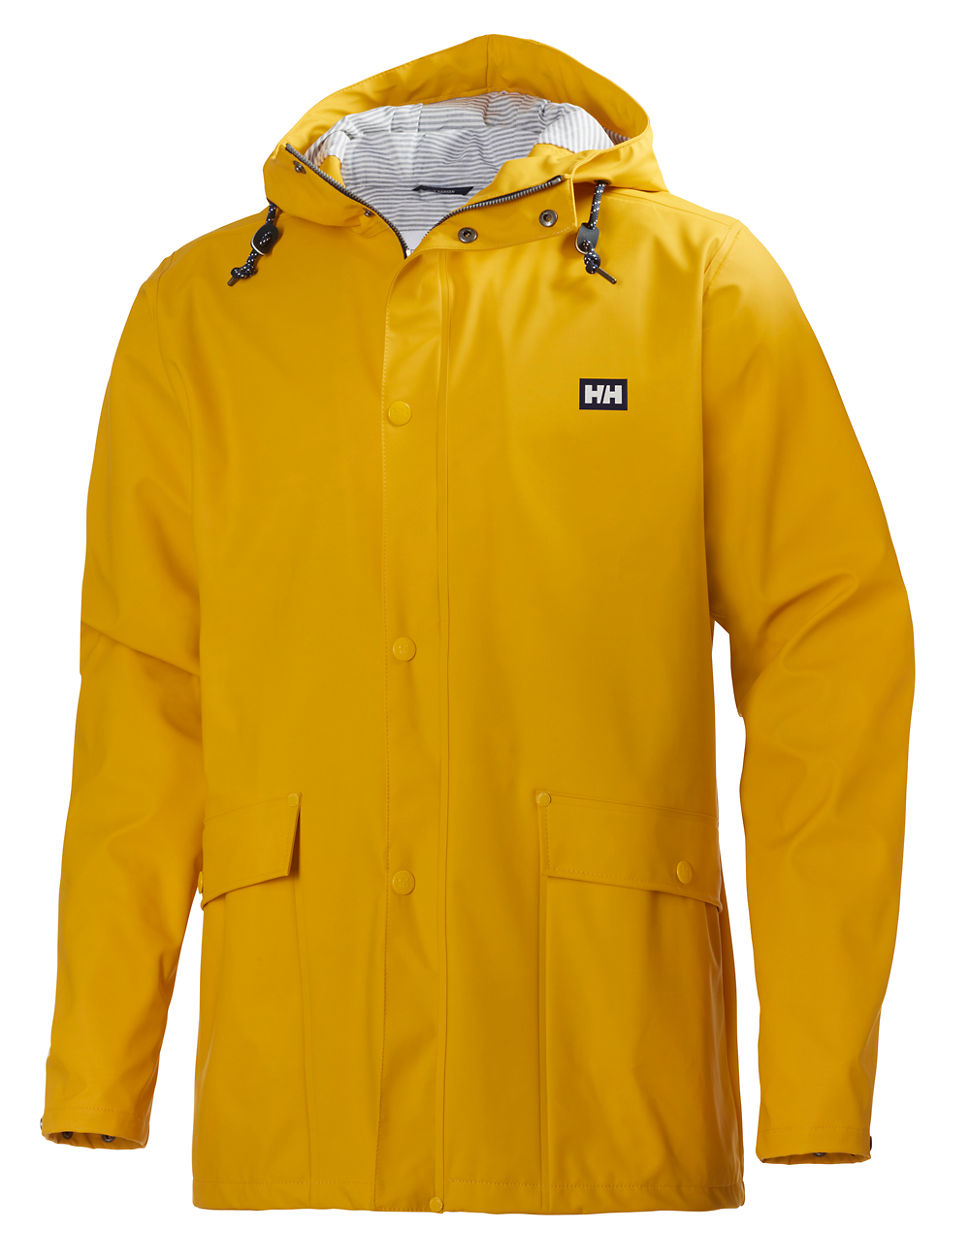 Lyst - Helly hansen Lerwick Raincoat in Yellow for Men